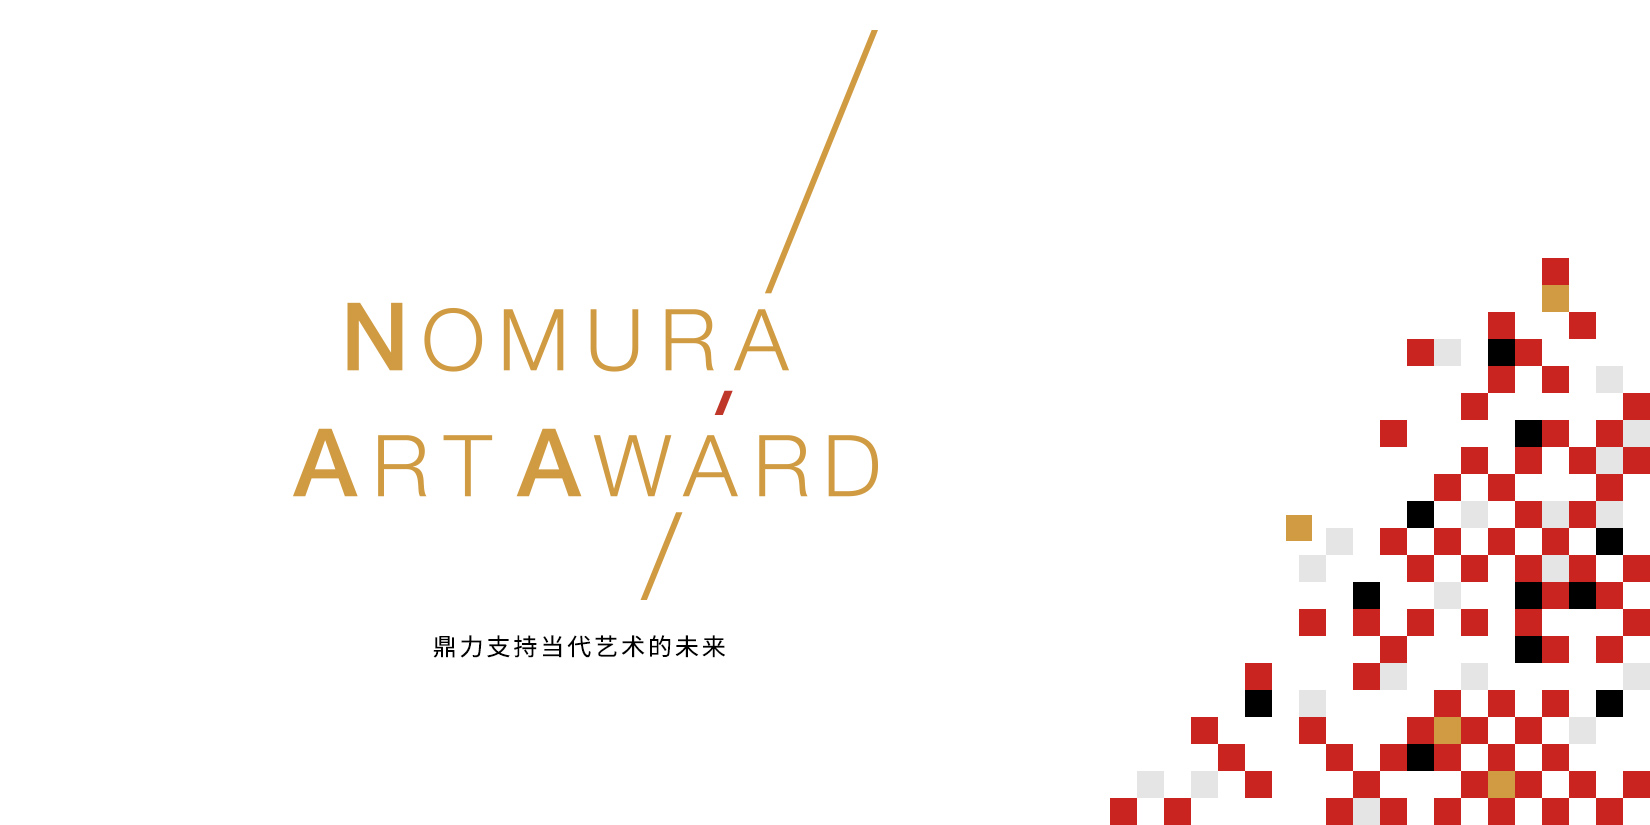 Nomura Art Award Supporting the Future of Contemporary Art